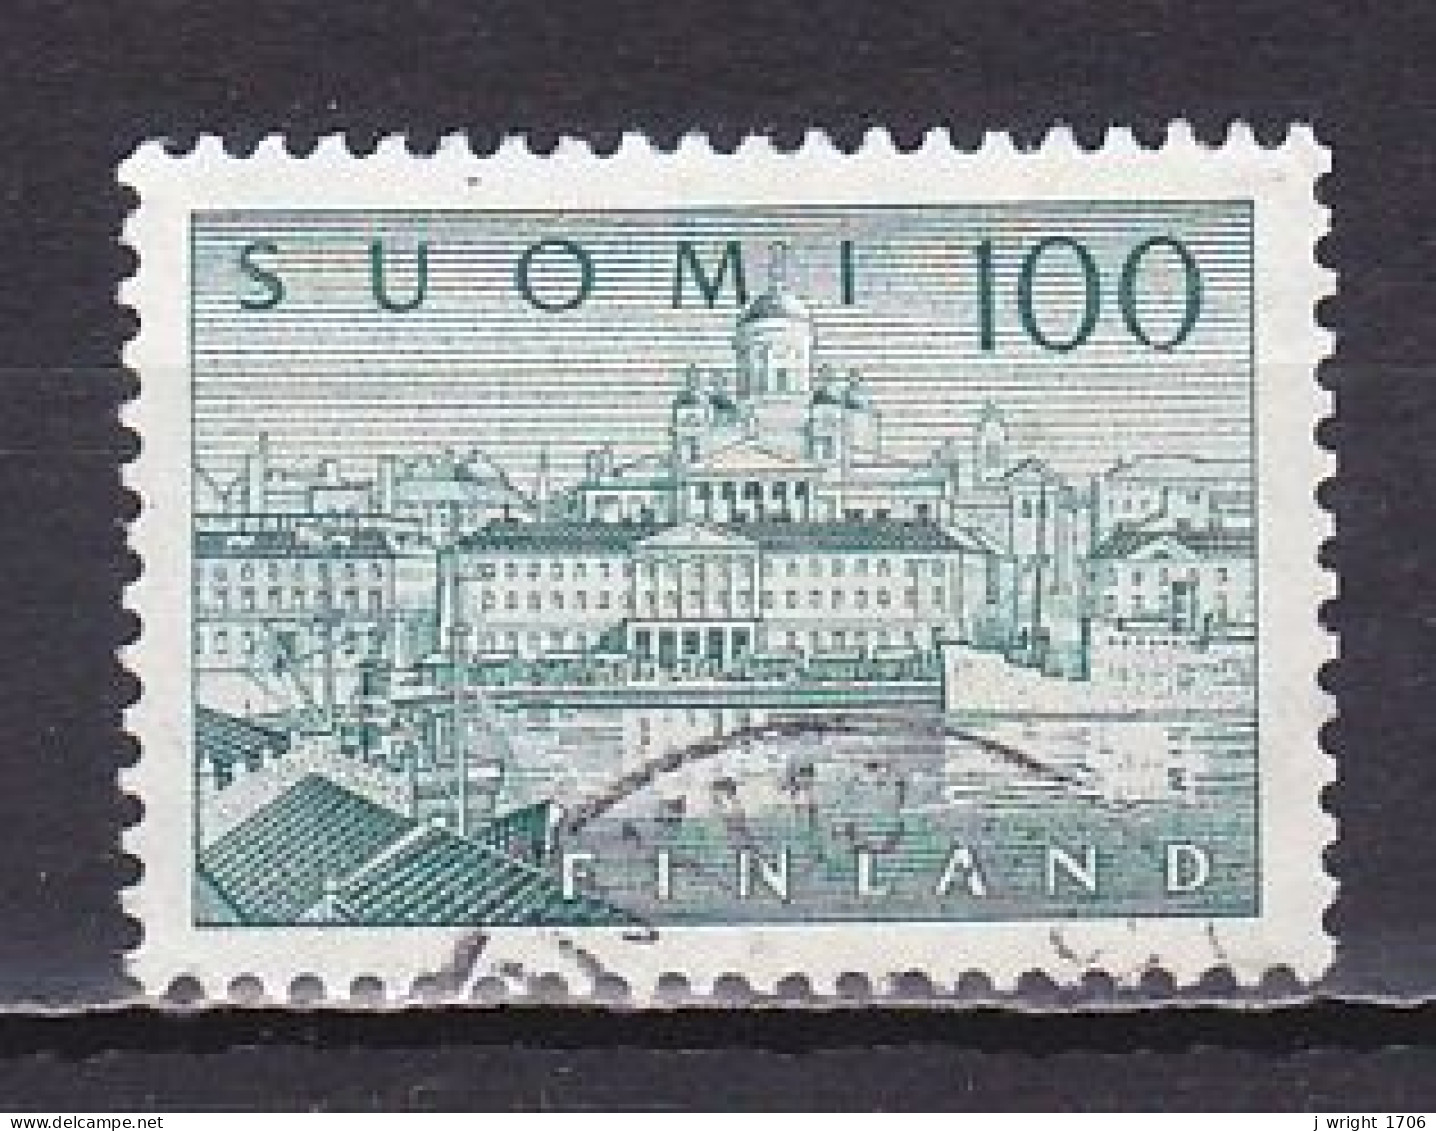 Finland, 1958, Helsinki Harbour, 100mk, USED - Oblitérés